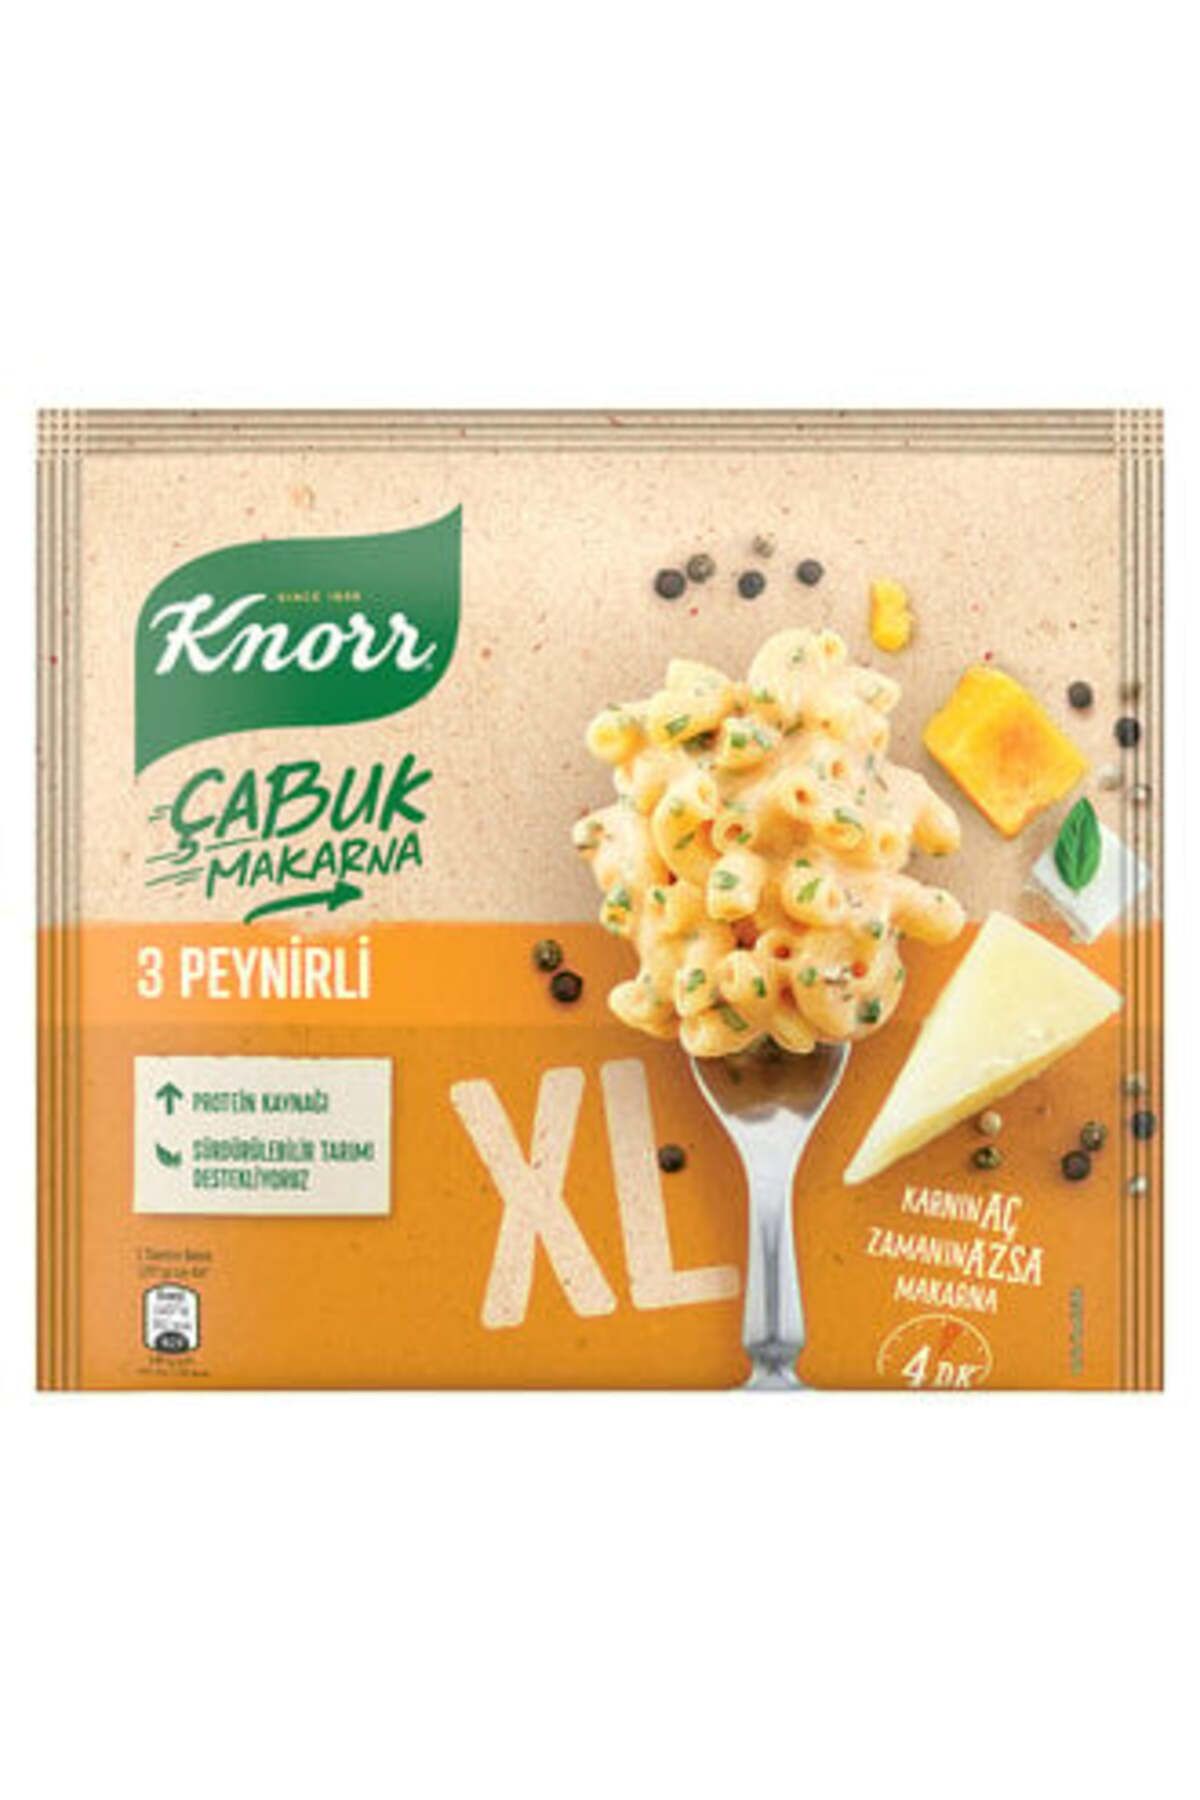 Knorr ( CİNO ÇİKOLATA ) Knorr Çabuk Makarna XL 3 Peynirli 97 Gr ( 2 ADET )